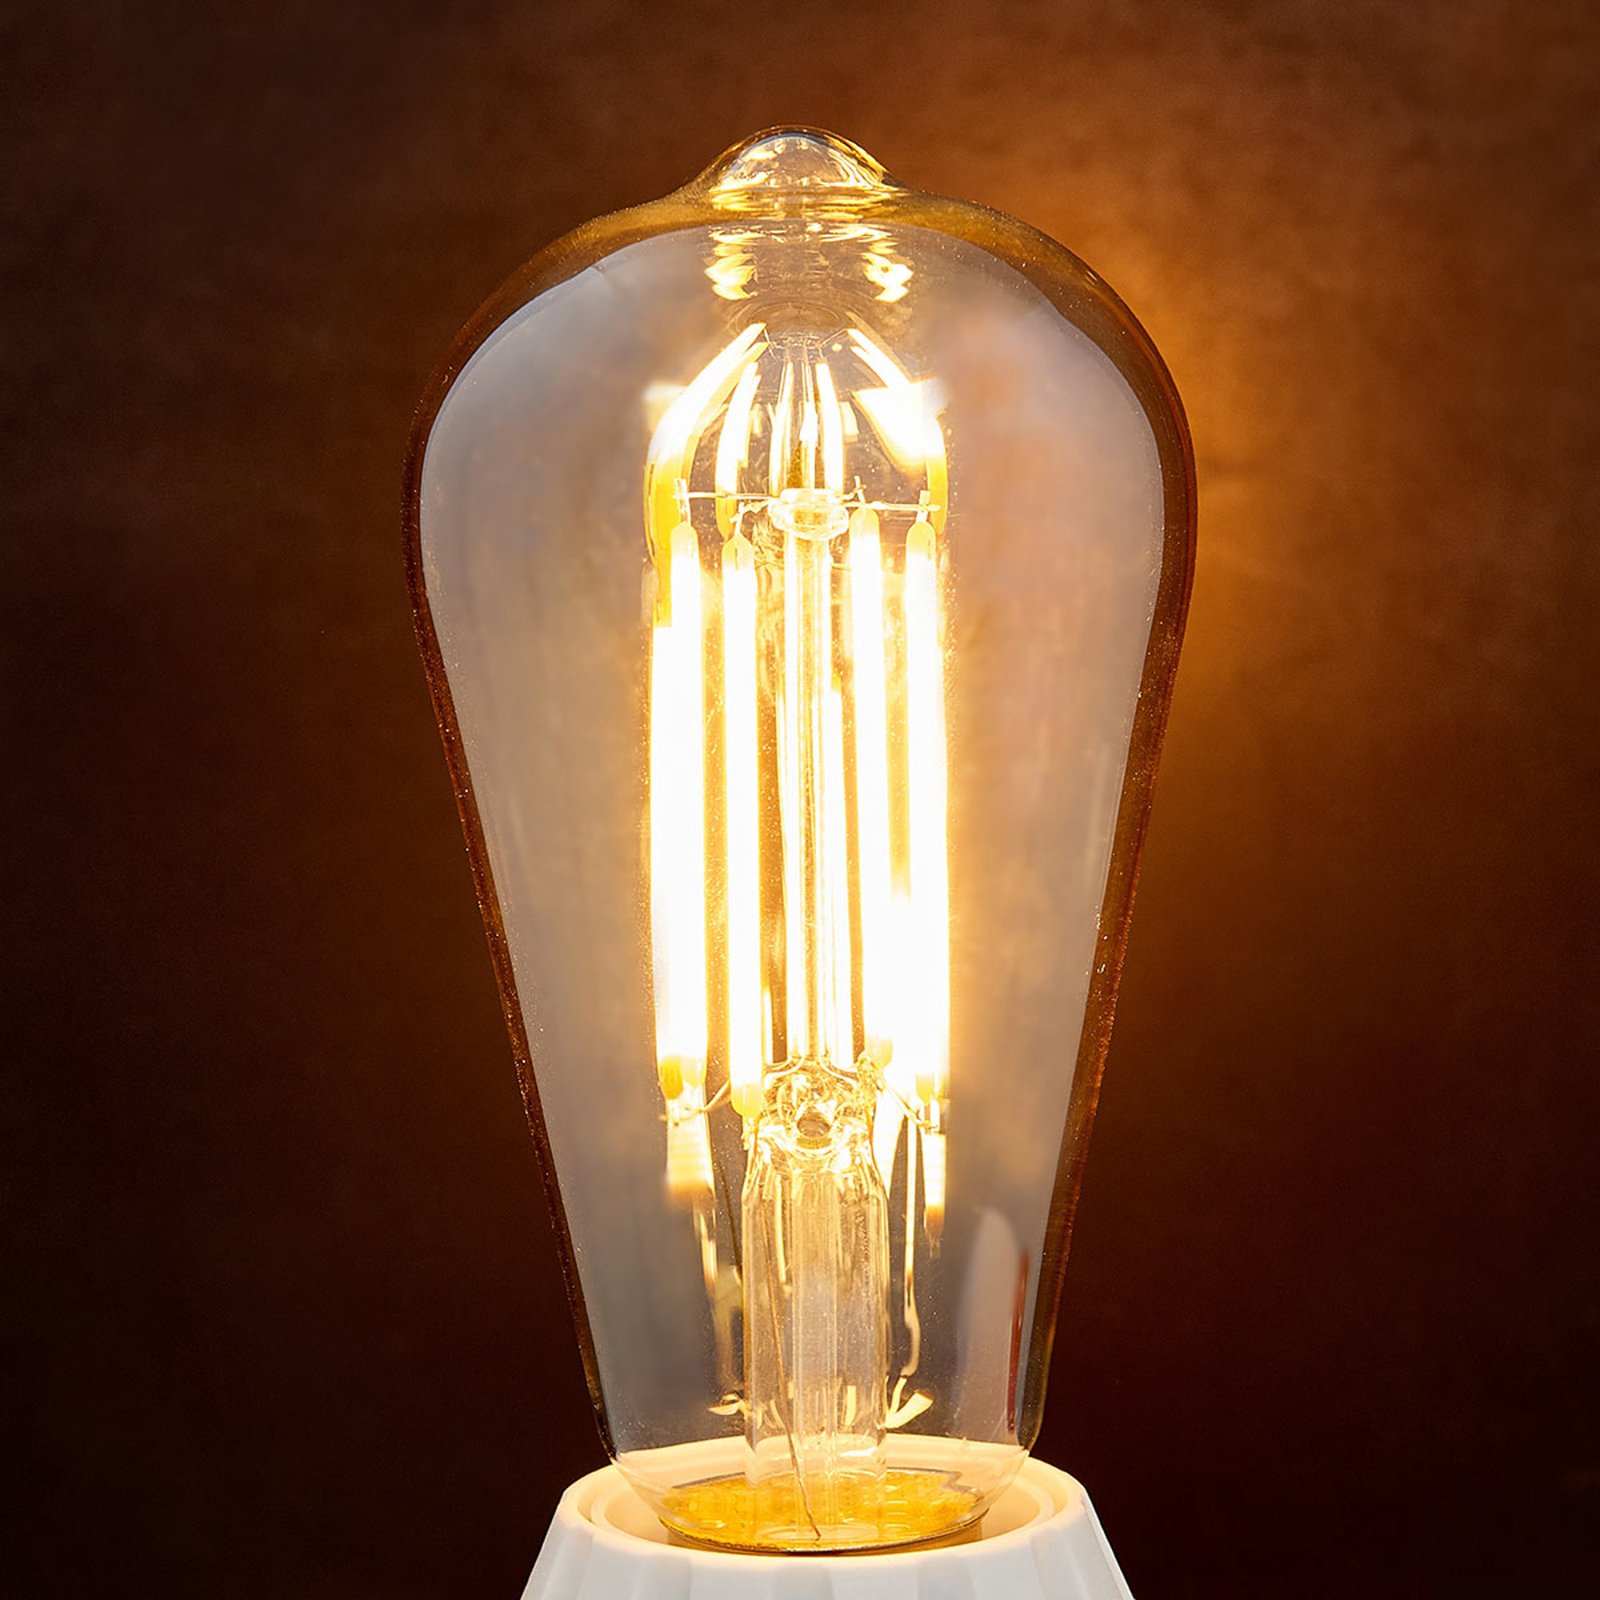 E27 LED-Rustikalampe 6W 500lm amber 1.800K 2er-Set